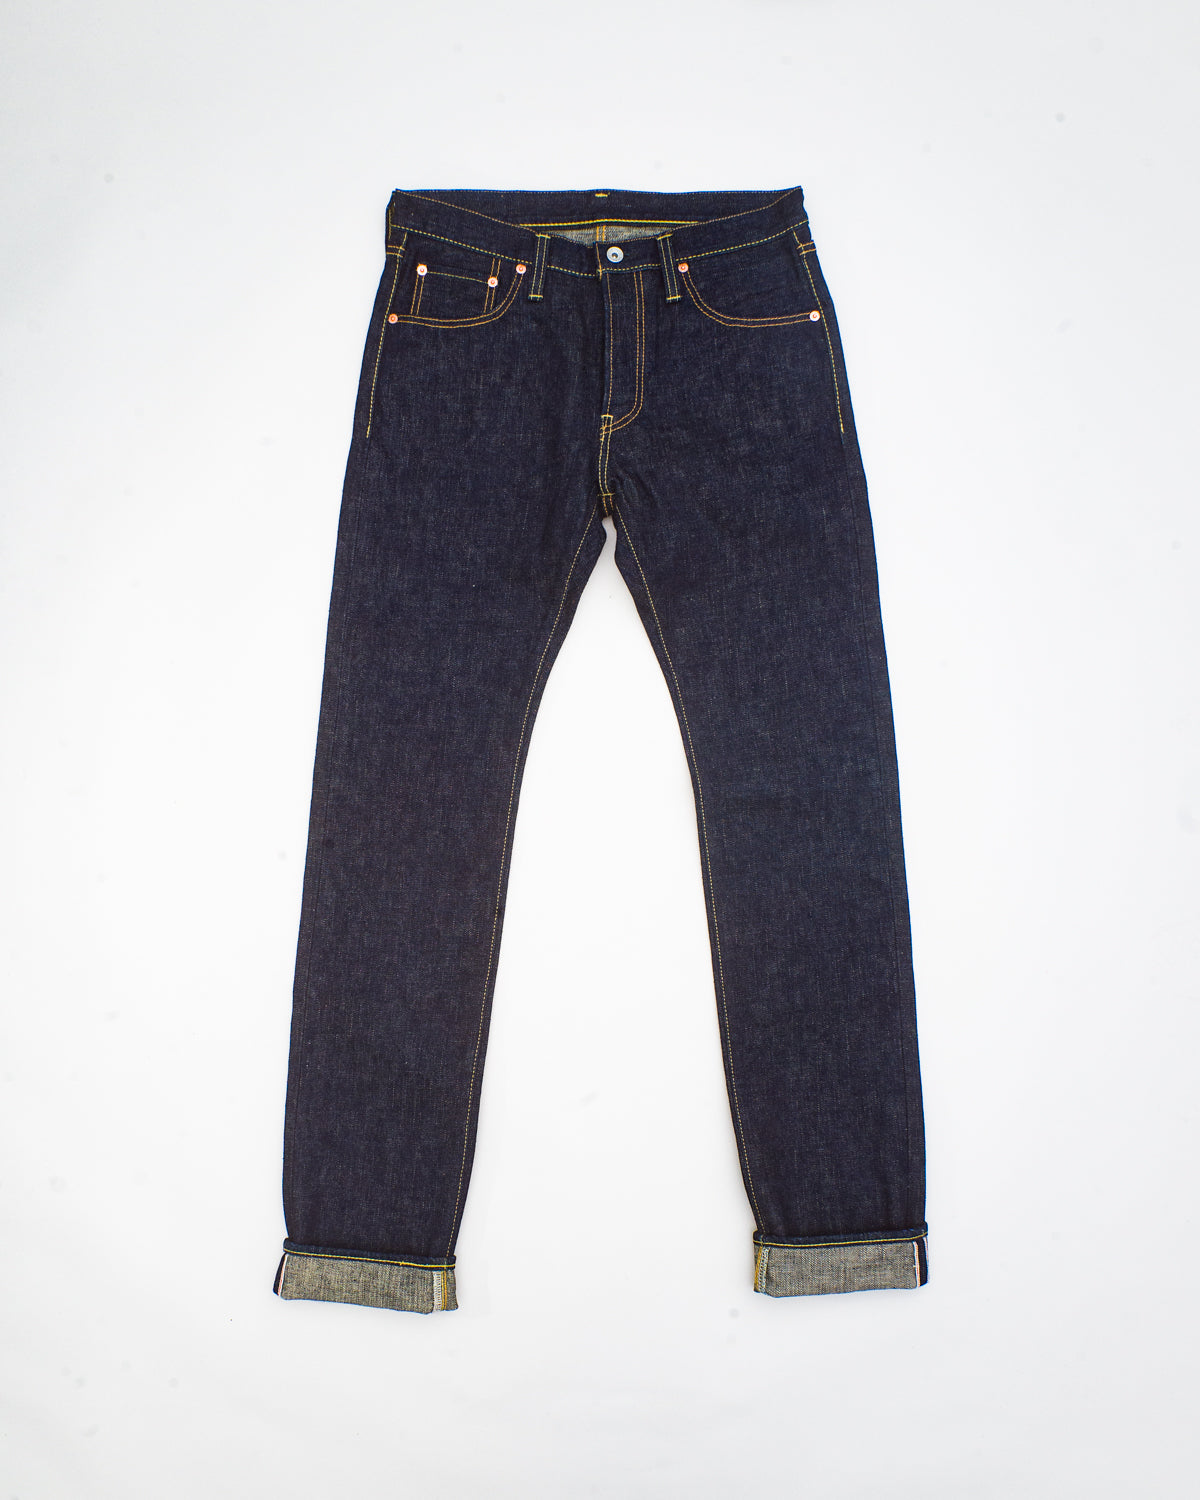 IH-888N 17oz Selvedge Denim Medium/High Rise Tapered Cut Jeans - Natural  Indigo